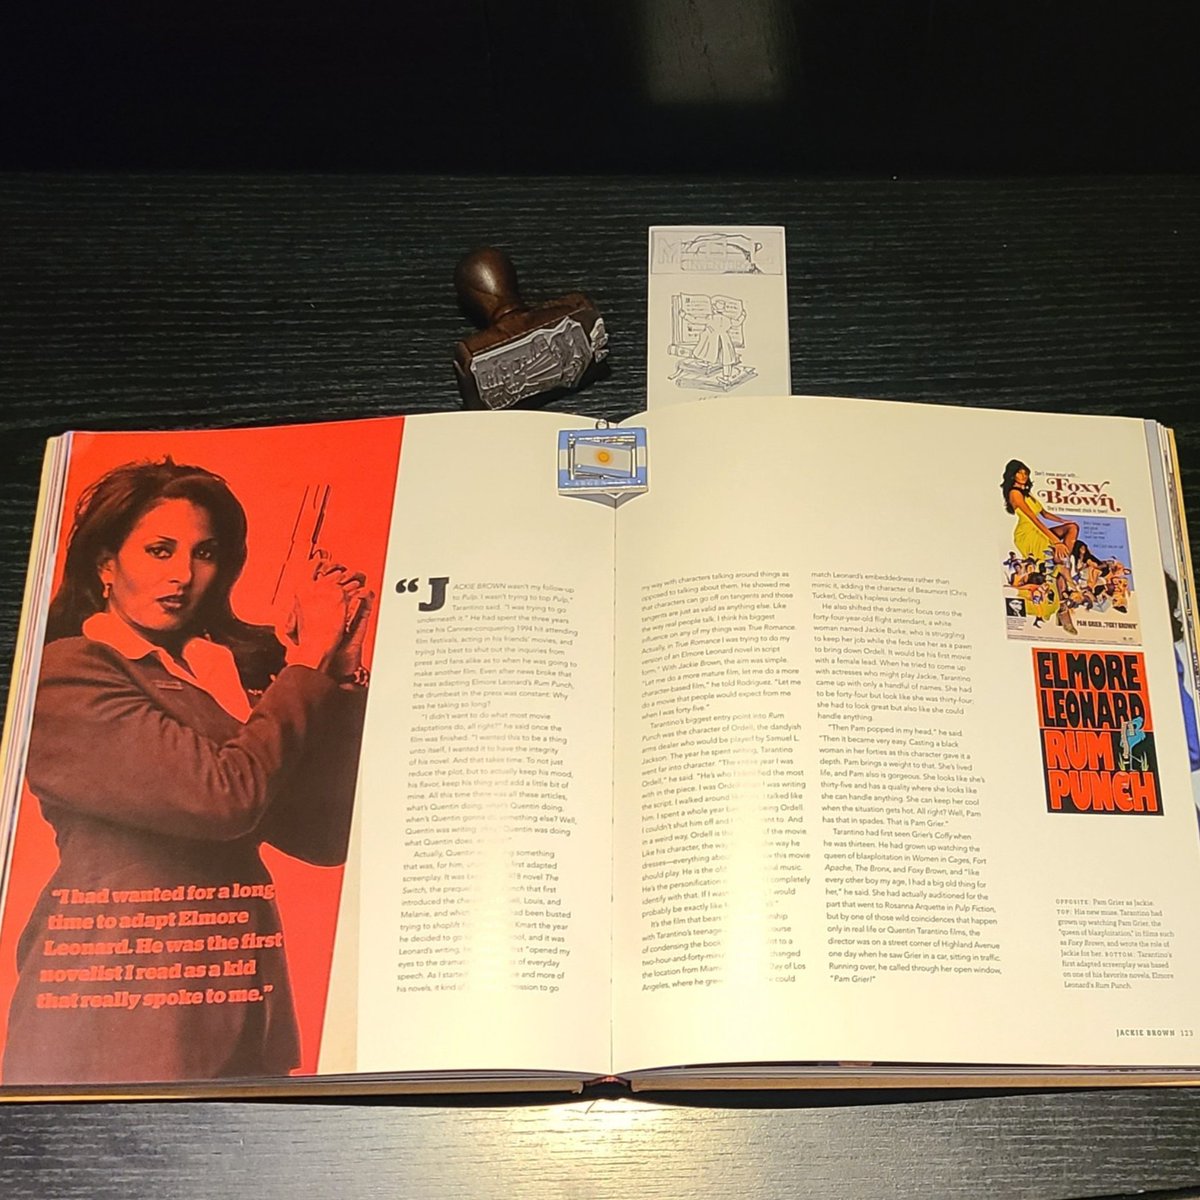 :pages: 122-123 (Tarantino: A Retrospective)

#tarantinoretrospective #tarantino #insighteditions #tomshone #books #libros #collector #bookworm #bookaholic #vintagebooks #books #bookcommunity #bookcovers #collecting #readersofinstagram #collecting #bookstagram #igreads